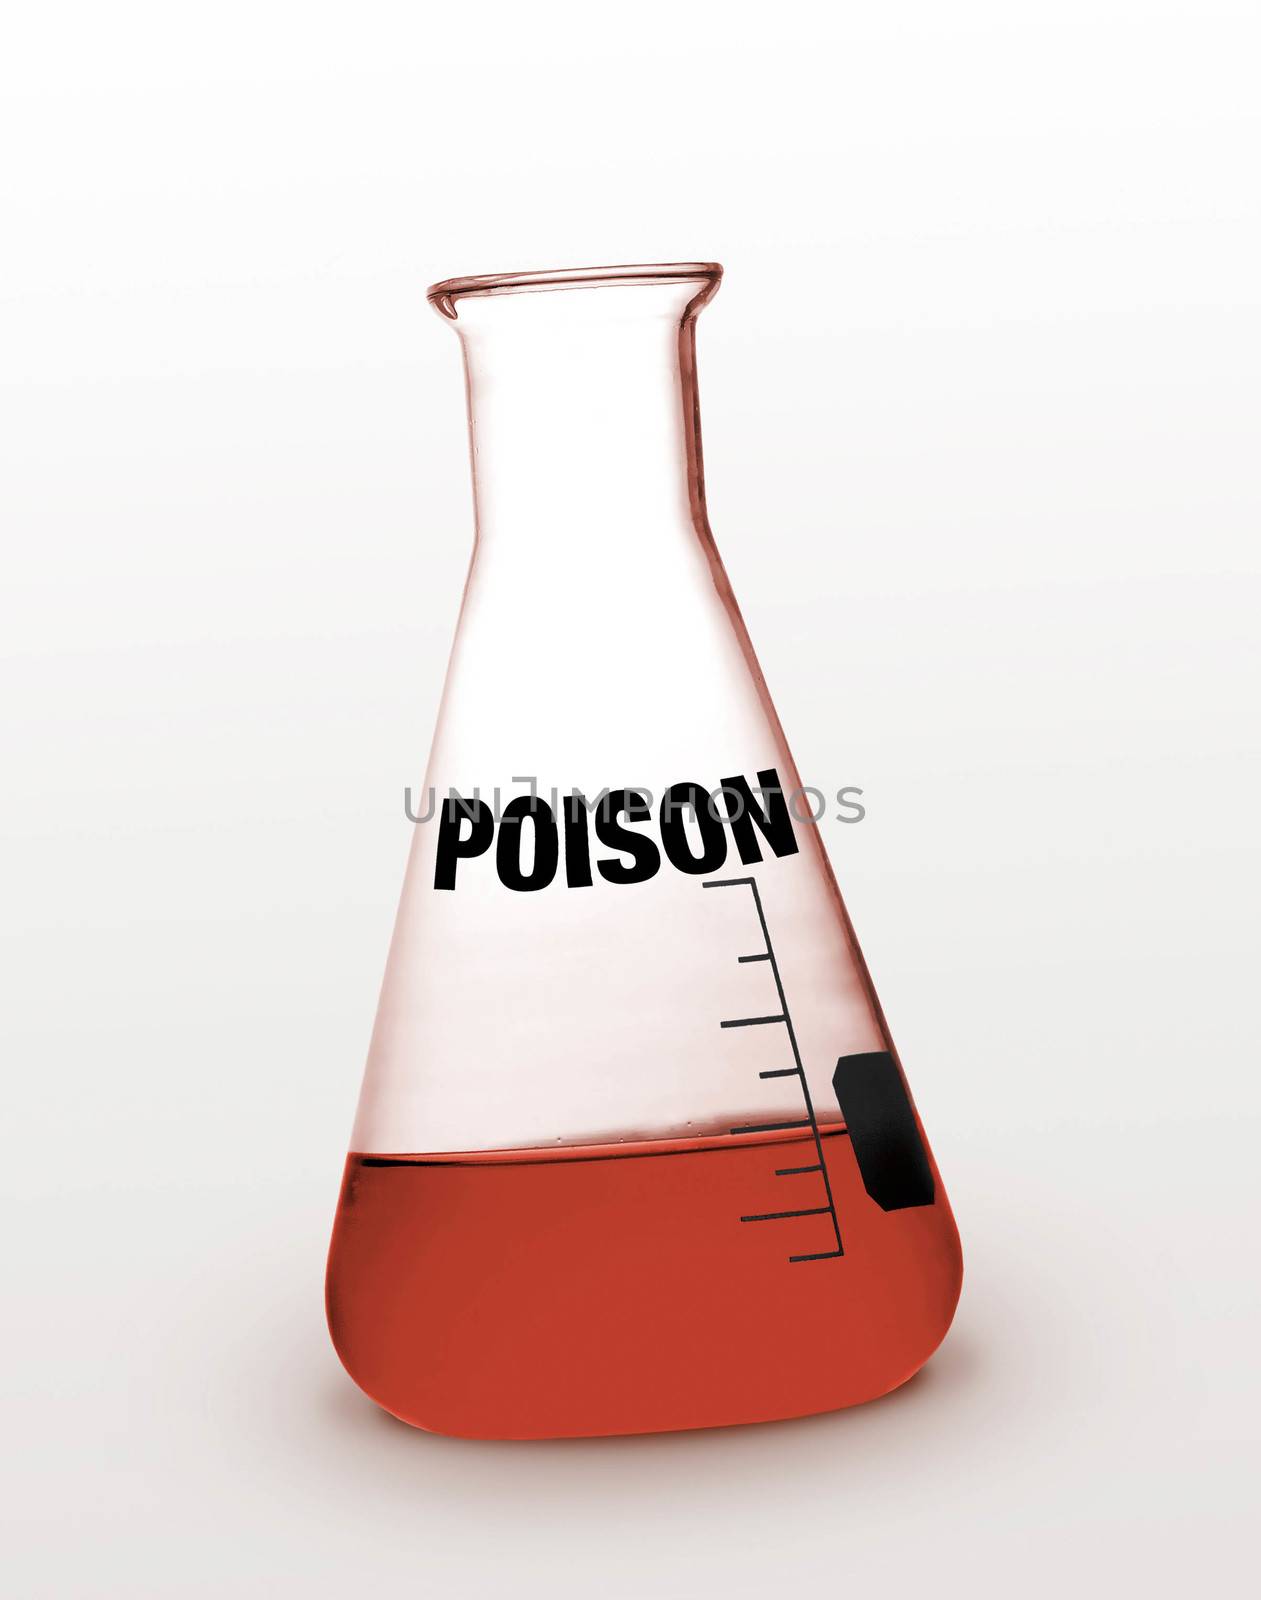 Vial or poison in tube